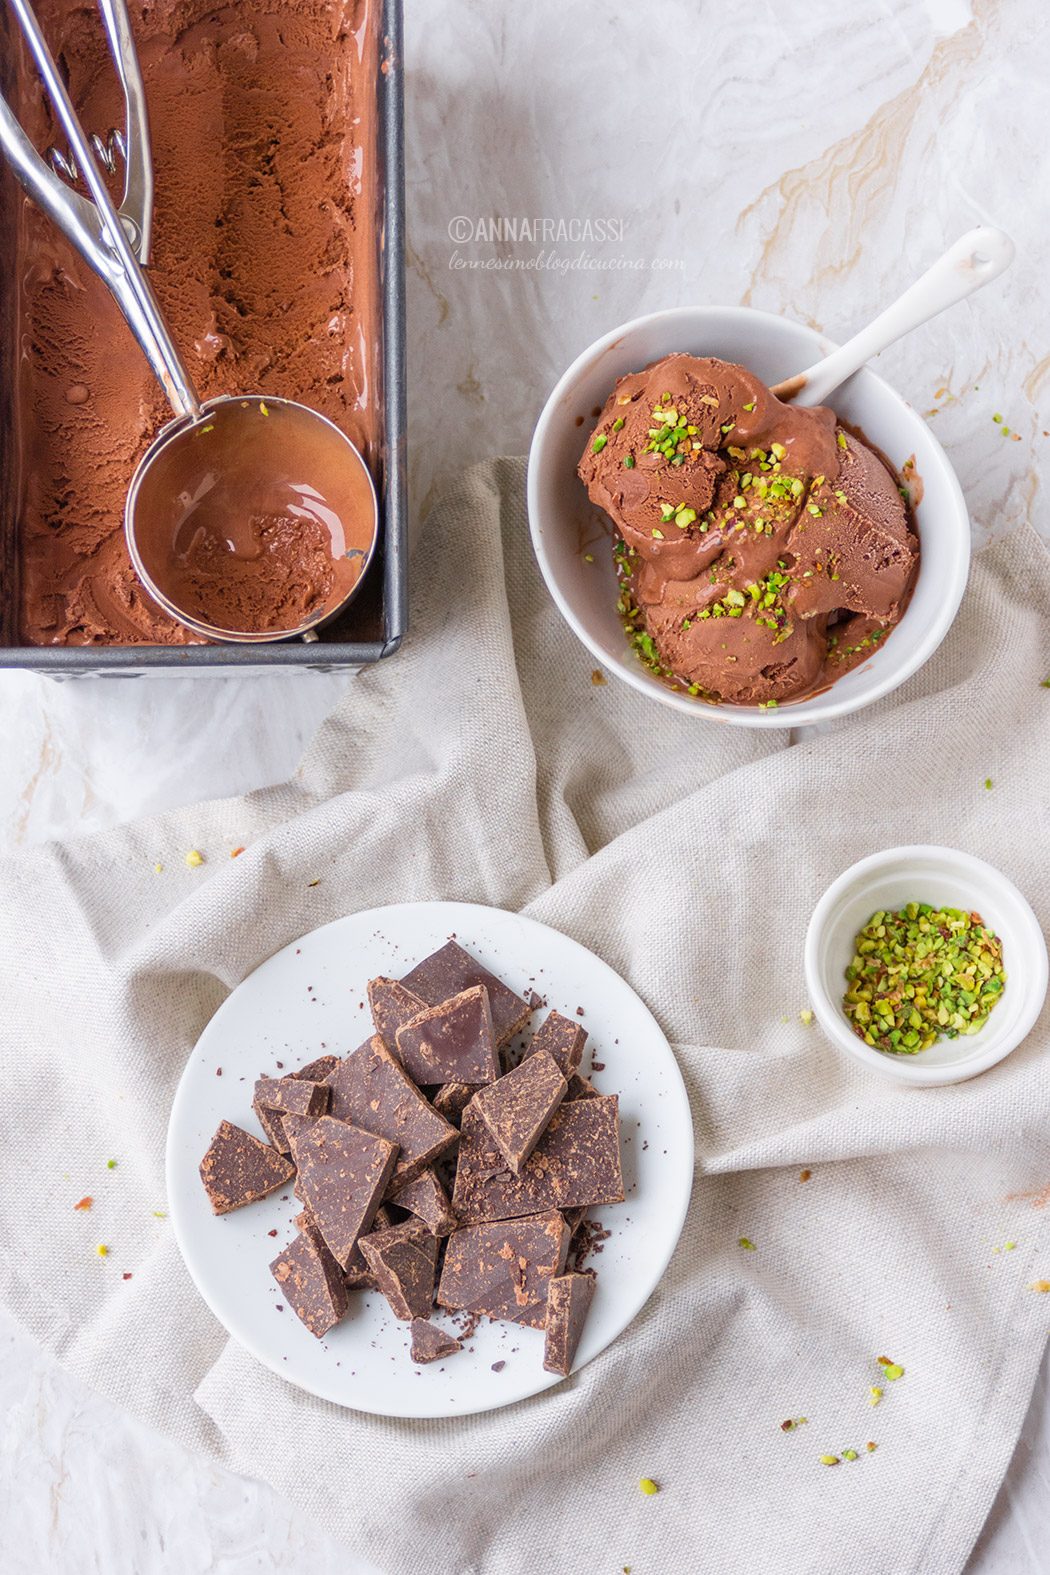 Gelato al cioccolato fondente: la ricetta senza gelatiera